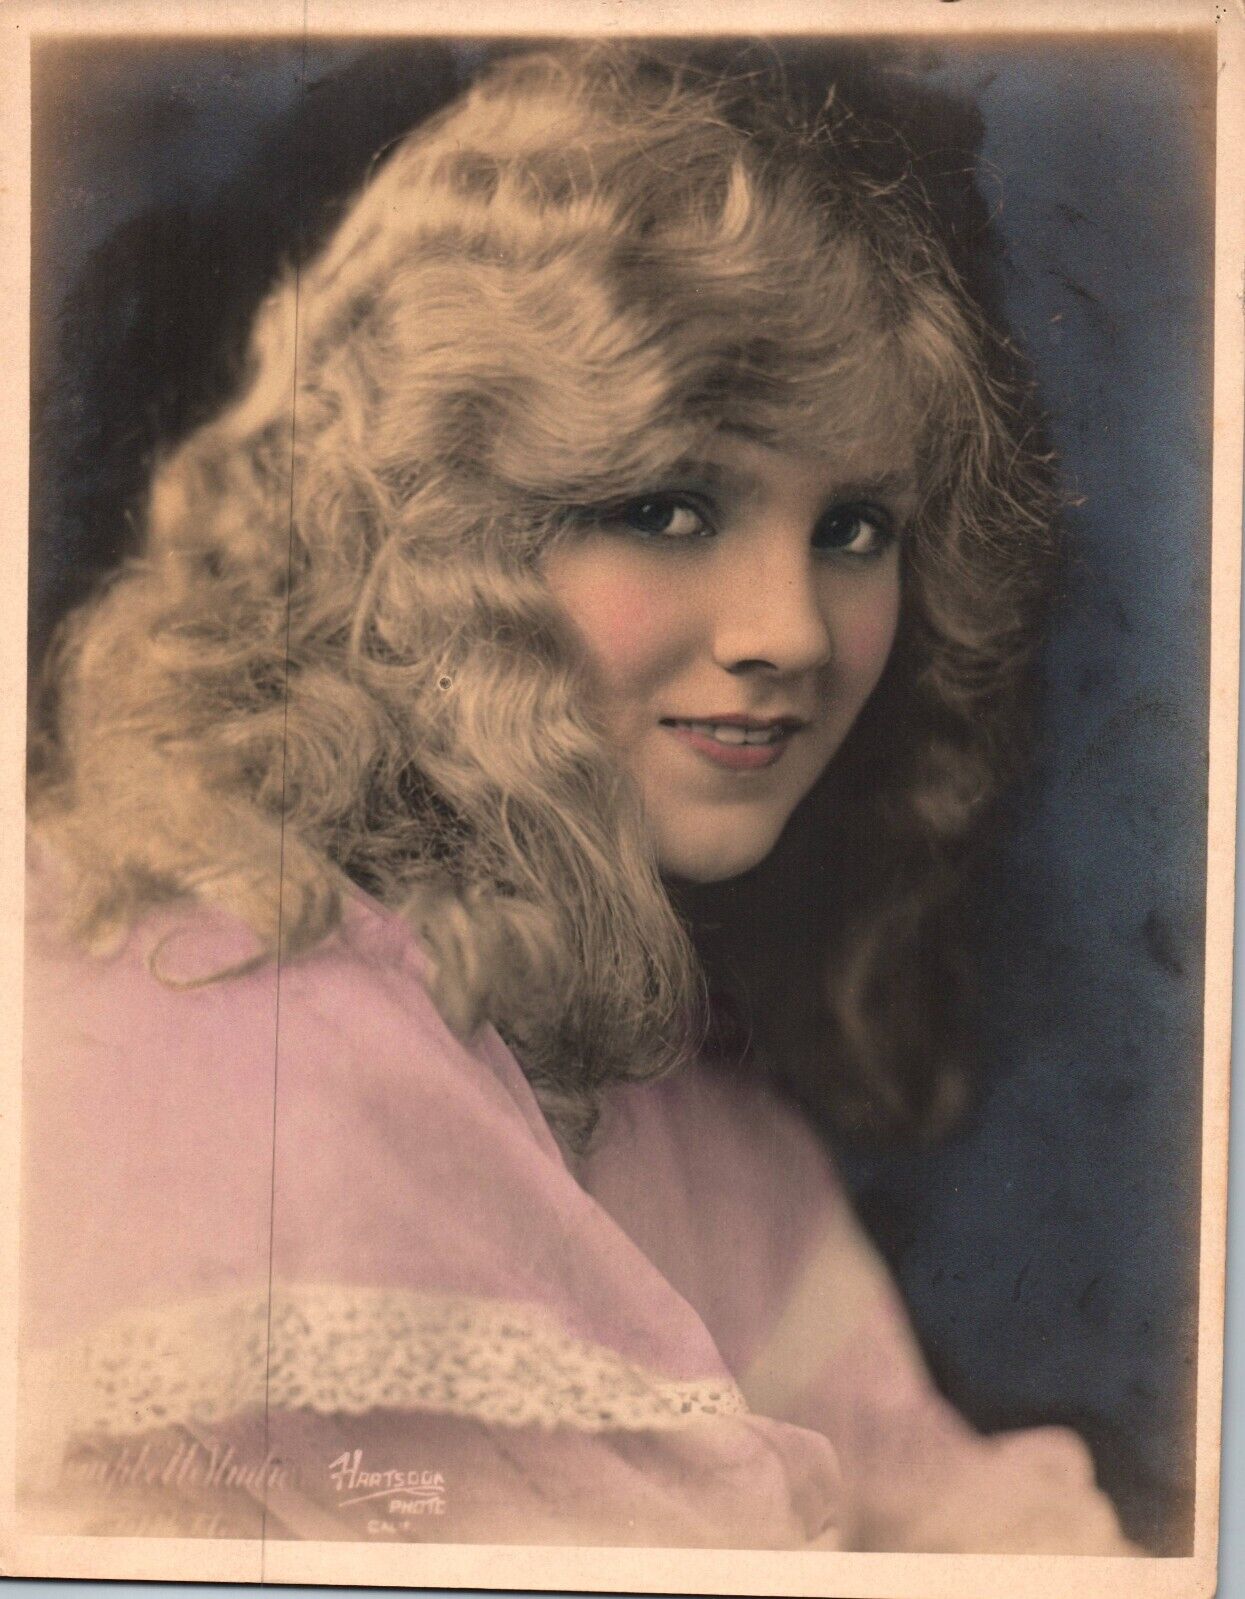 HOLLYWOOD BEAUTY MARY MILES MINTER STYLISH POSE STUNNING PORTRAIT 1920s Photo N